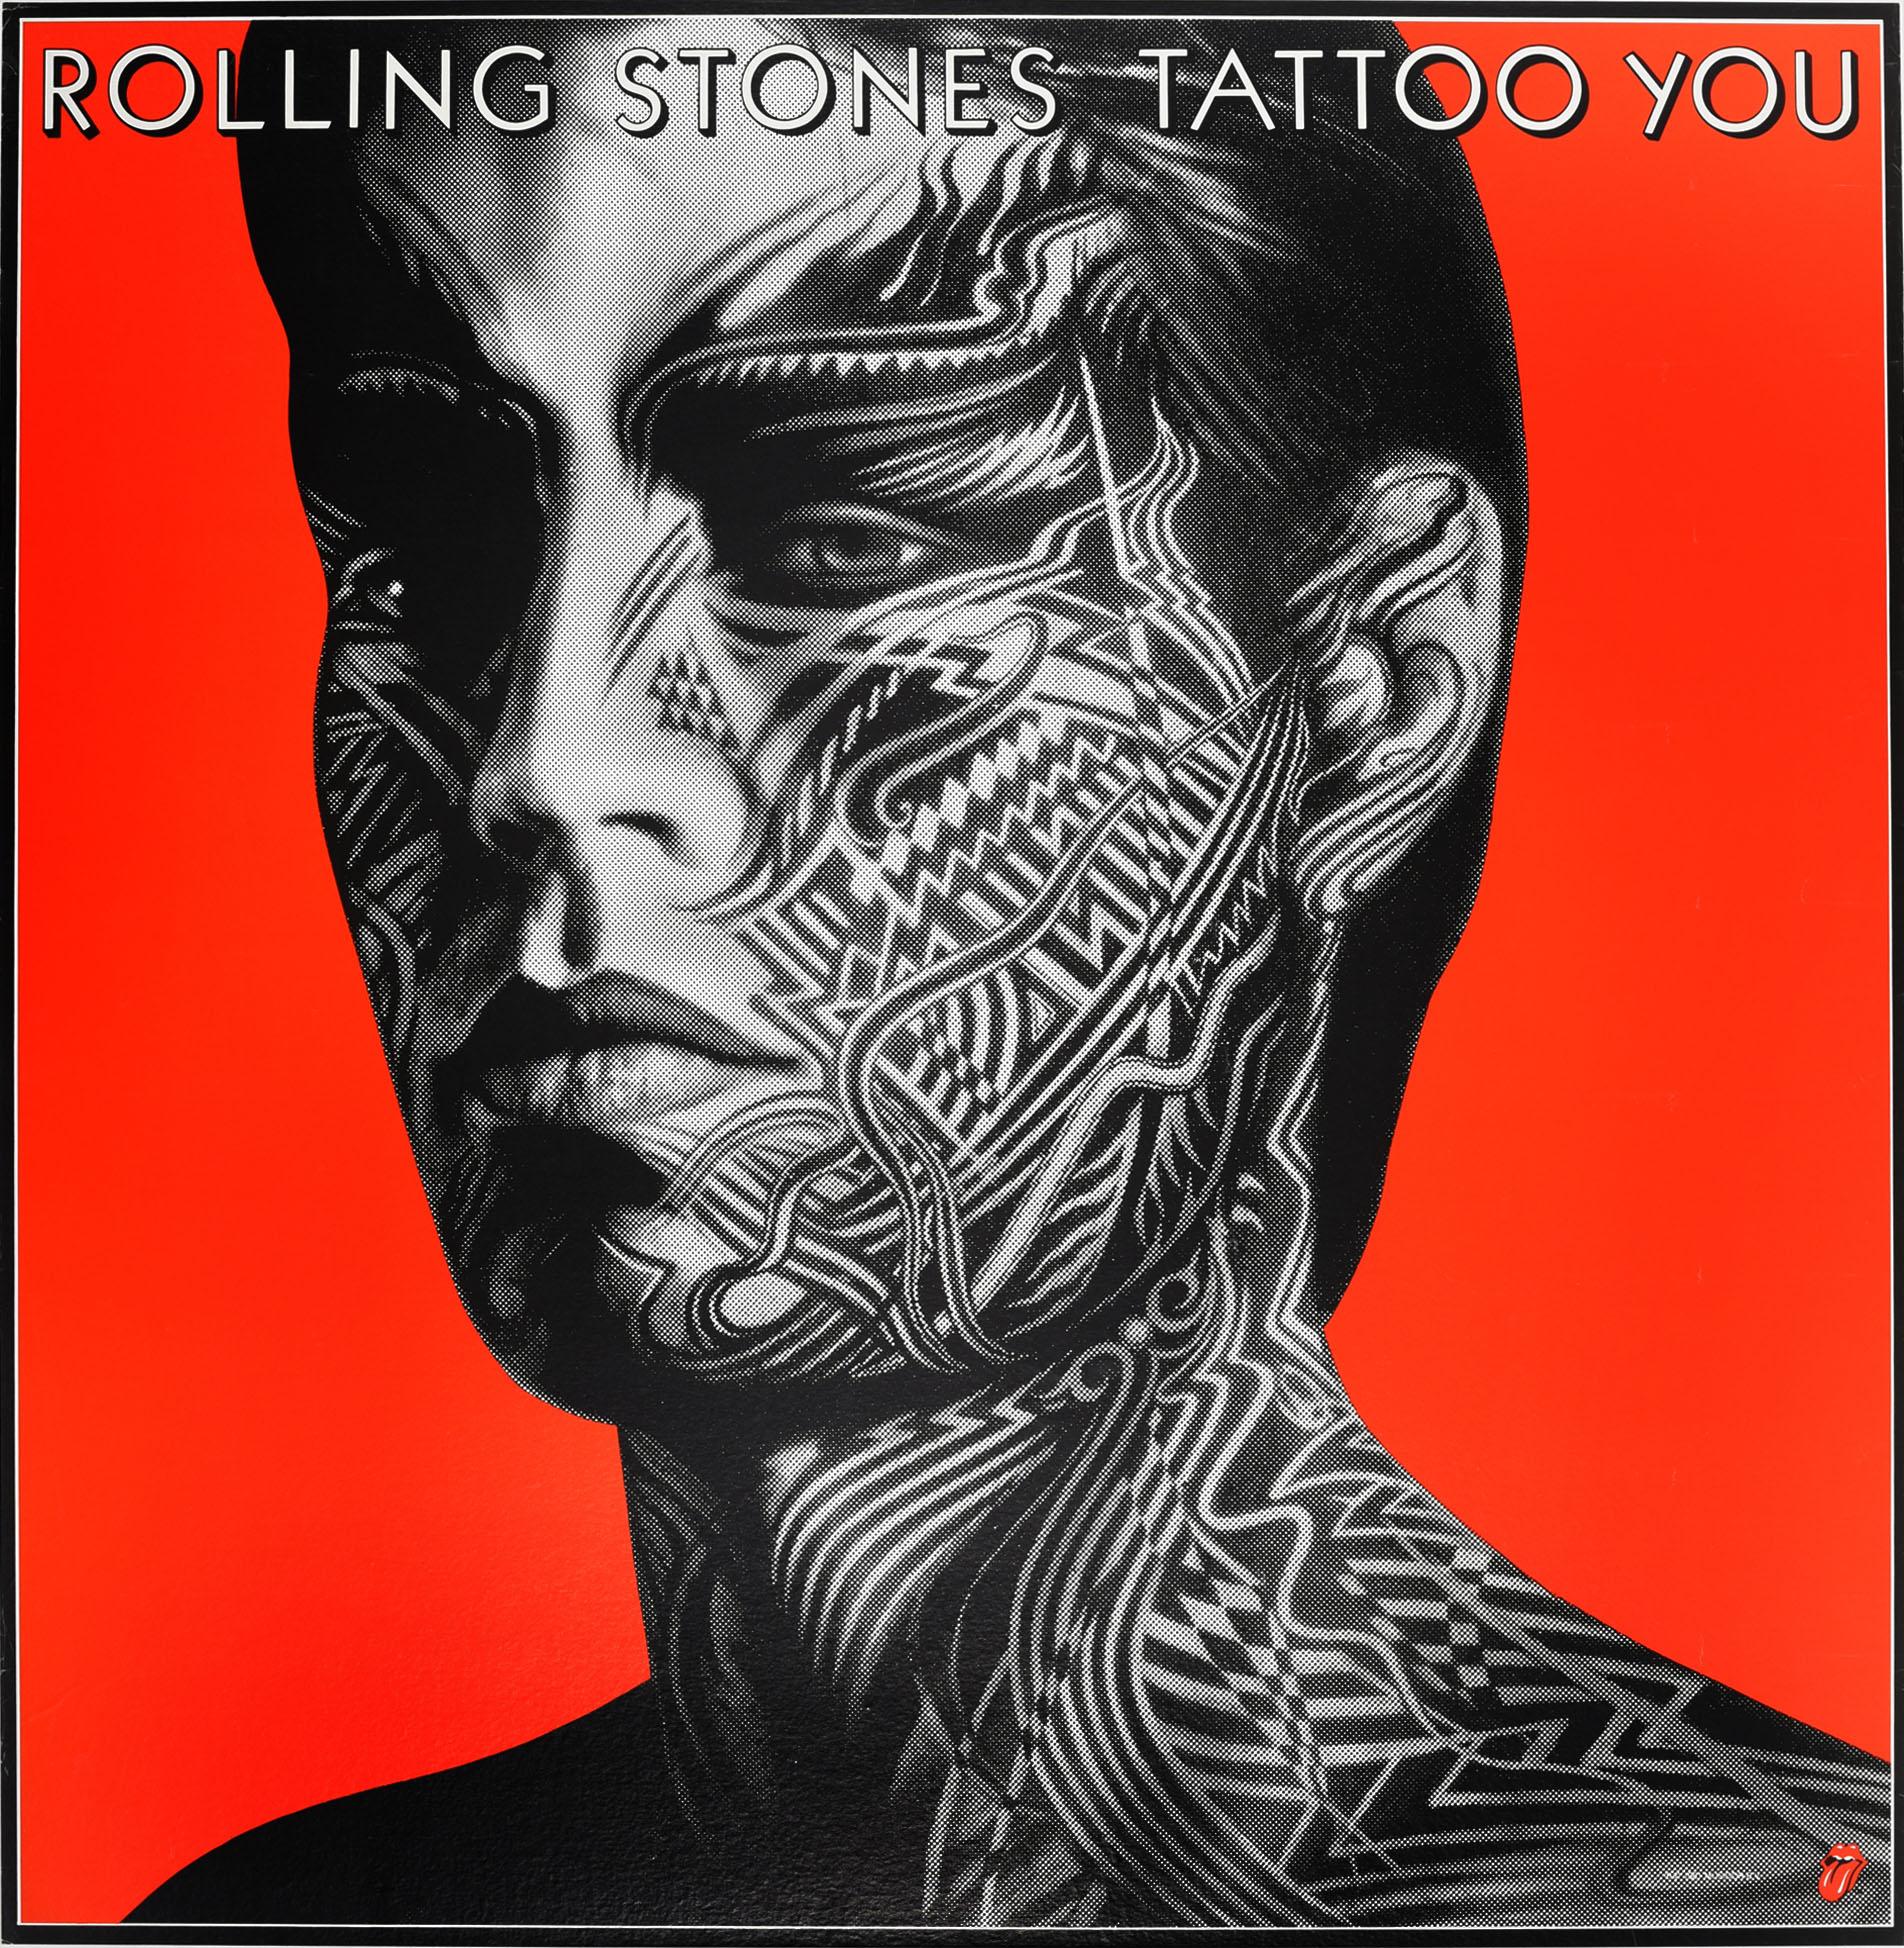 Peter Corriston Print - Original Vintage Mick Jagger Poster The Rolling Stones Tattoo You Album Design